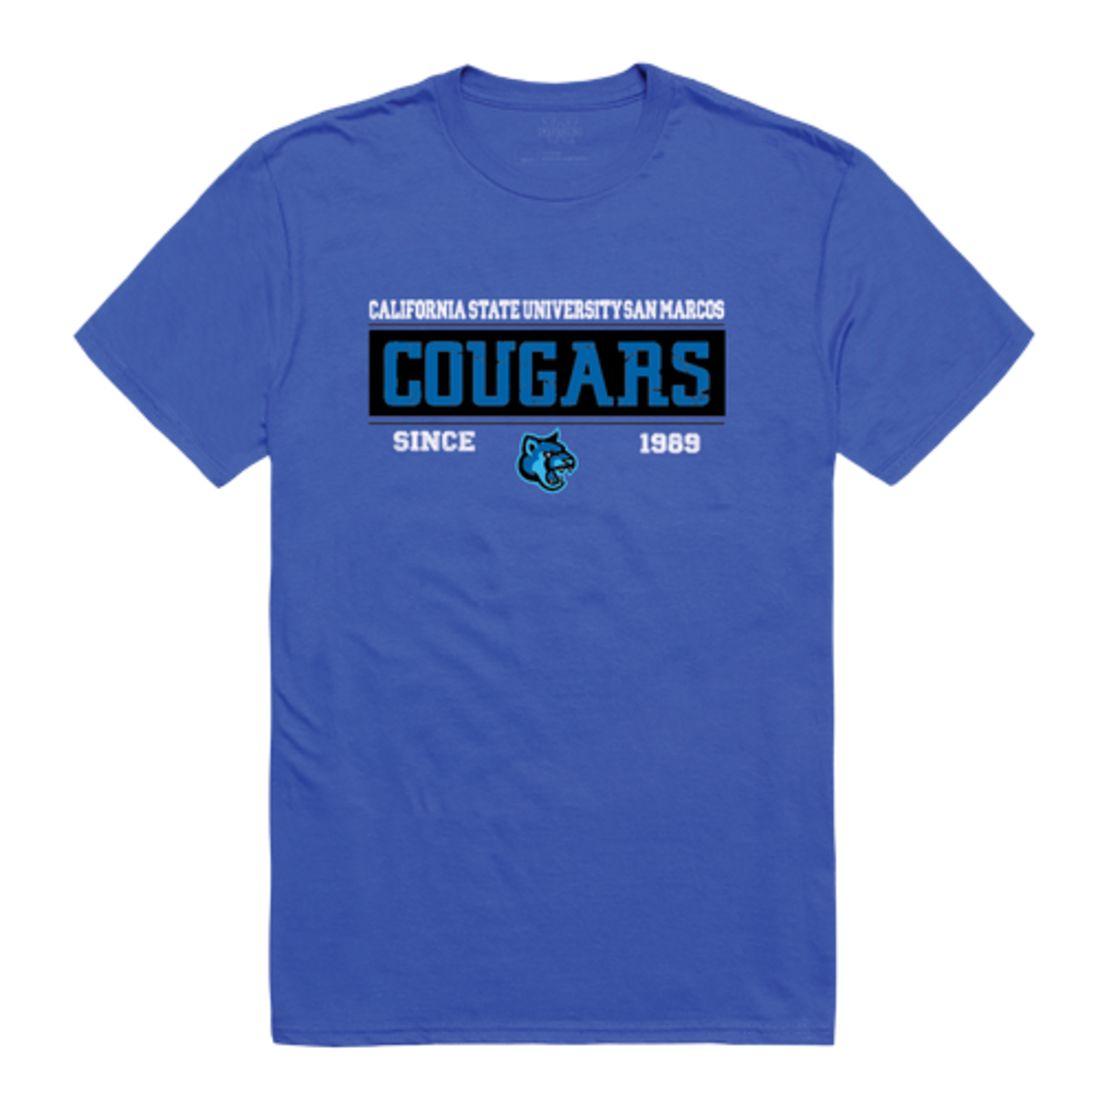 California State University San Marcos Cougars Established T-Shirt Tee